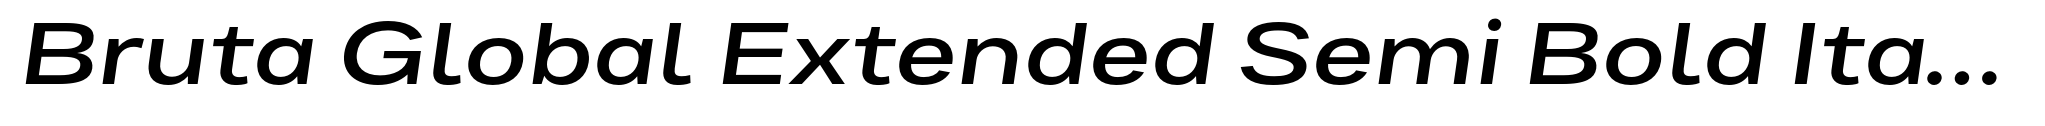 Bruta Global Extended Semi Bold Italic image